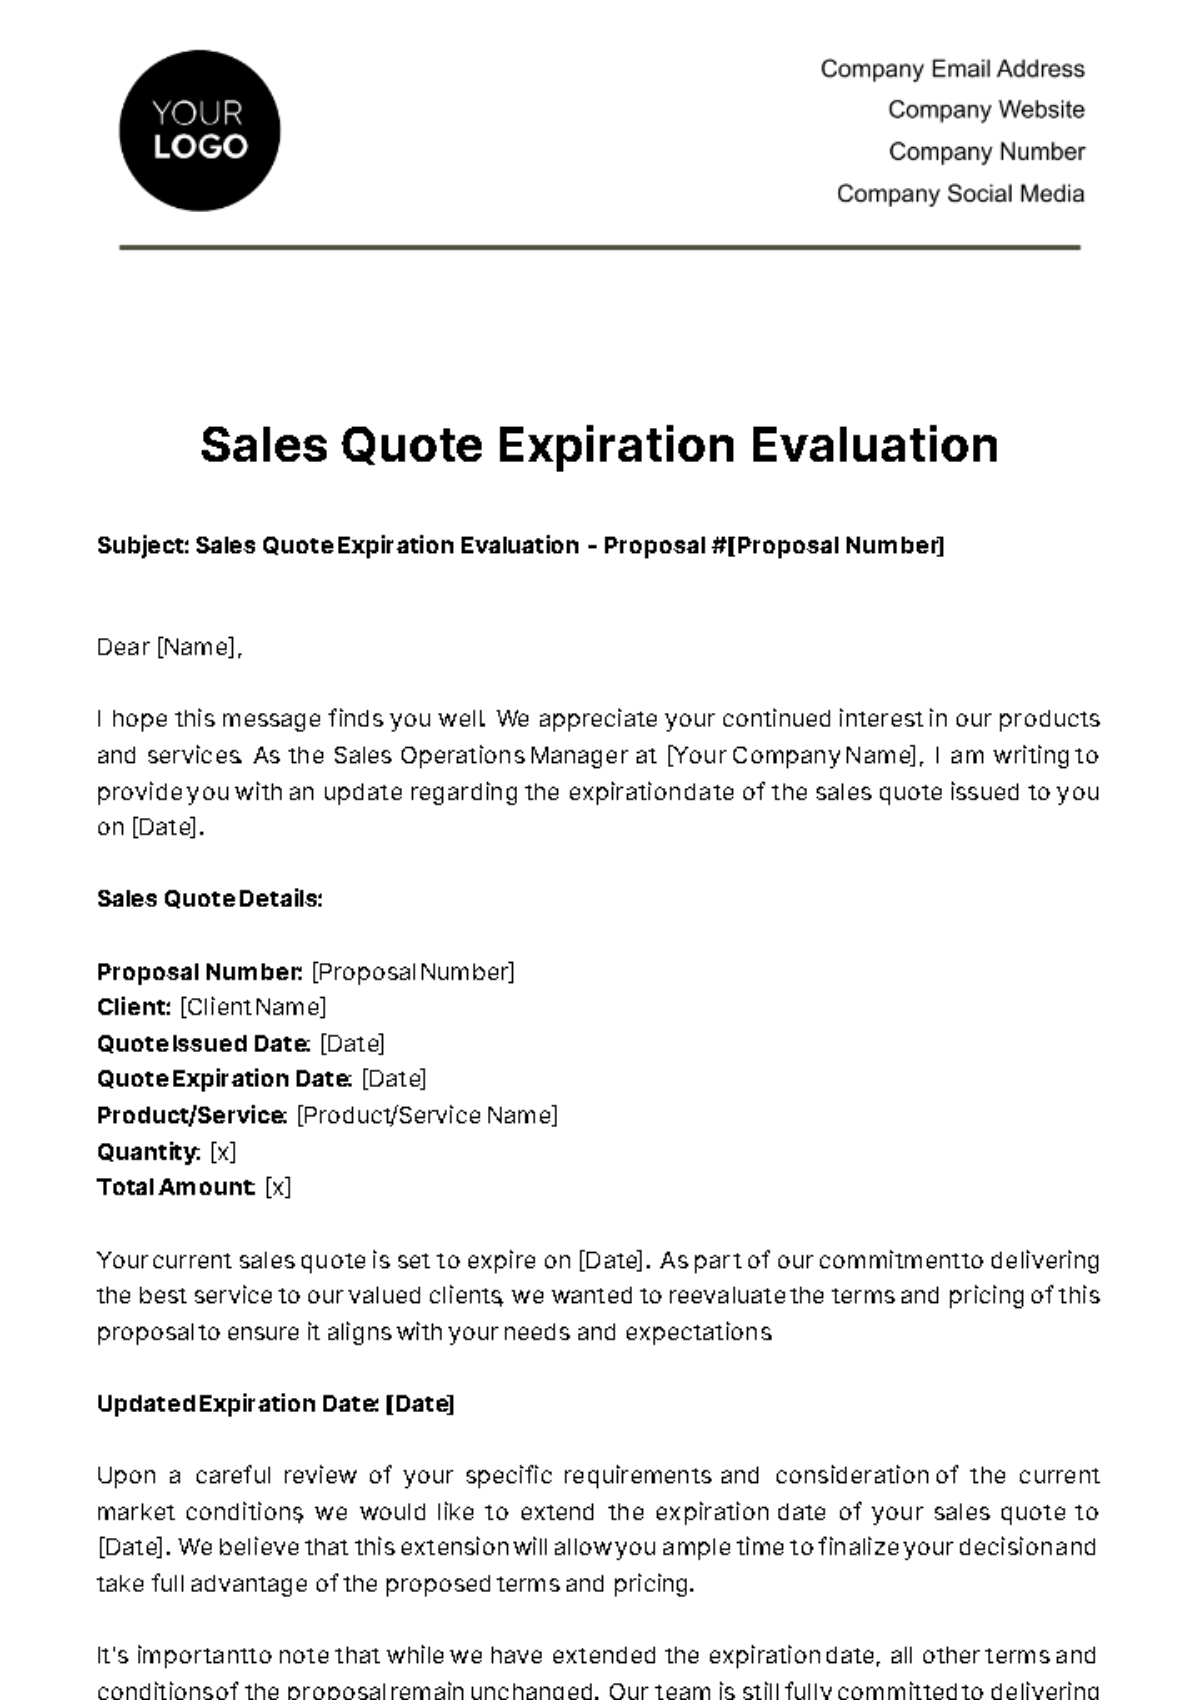 Sales Quote Expiration Evaluation Template